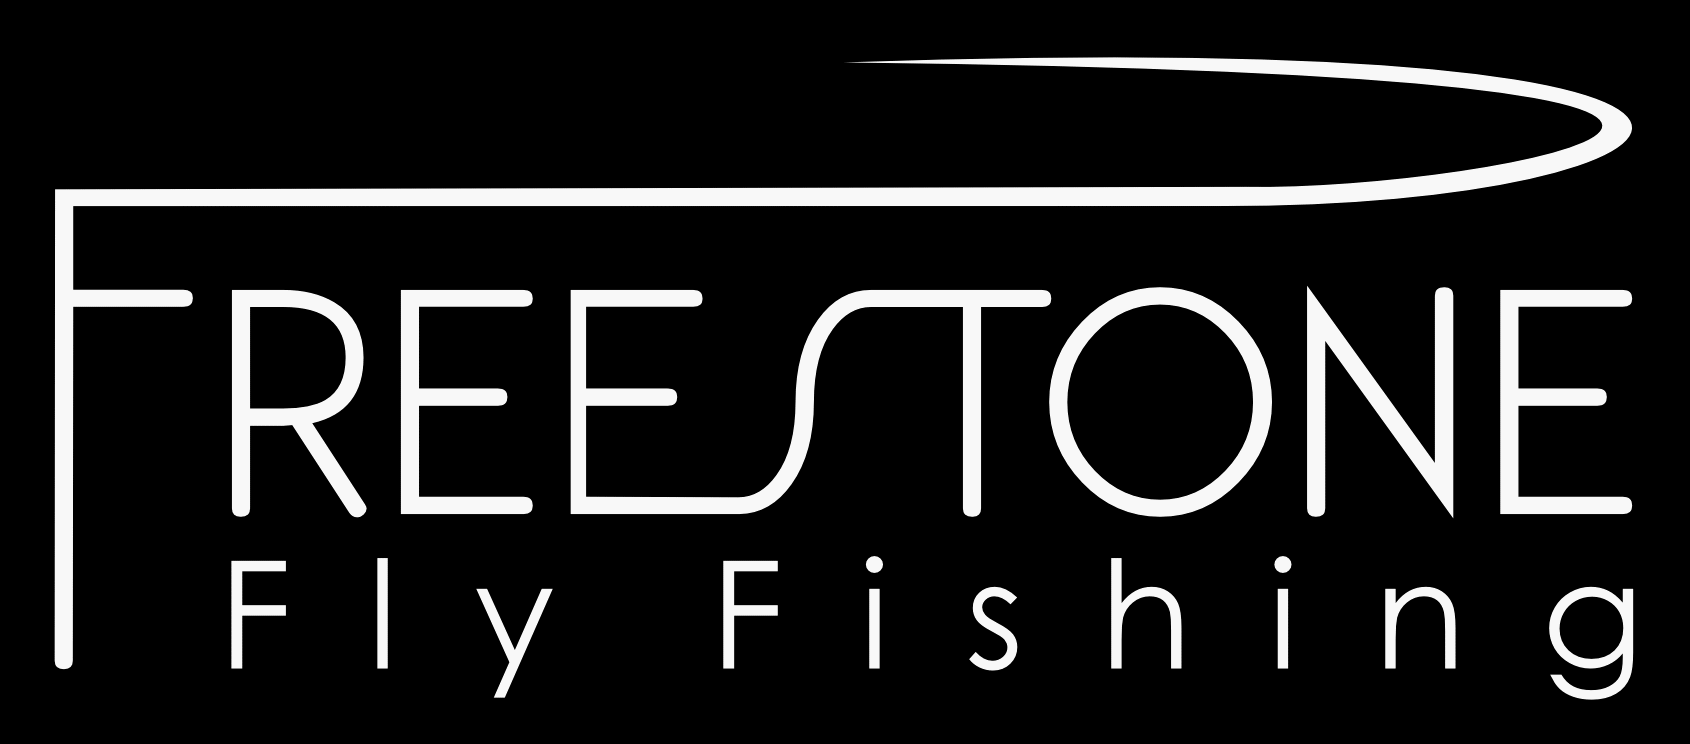 Freestone Fly Fishing